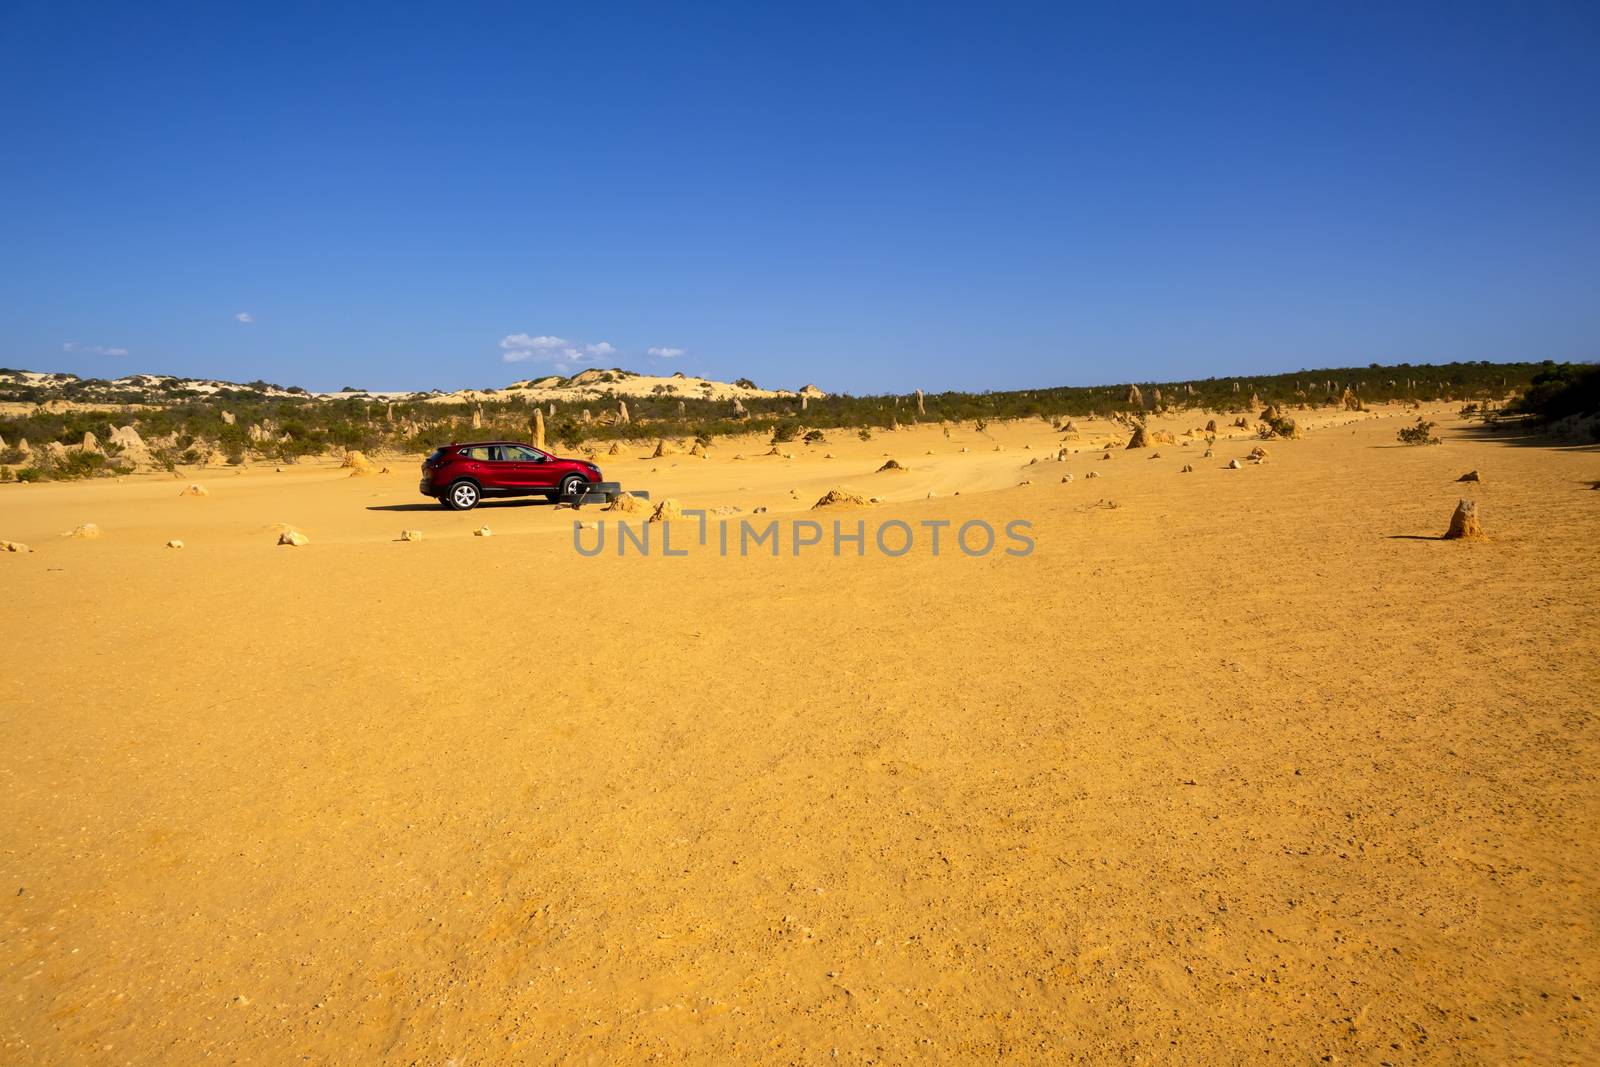 An image of the Pinnacles sand desert Western Australia